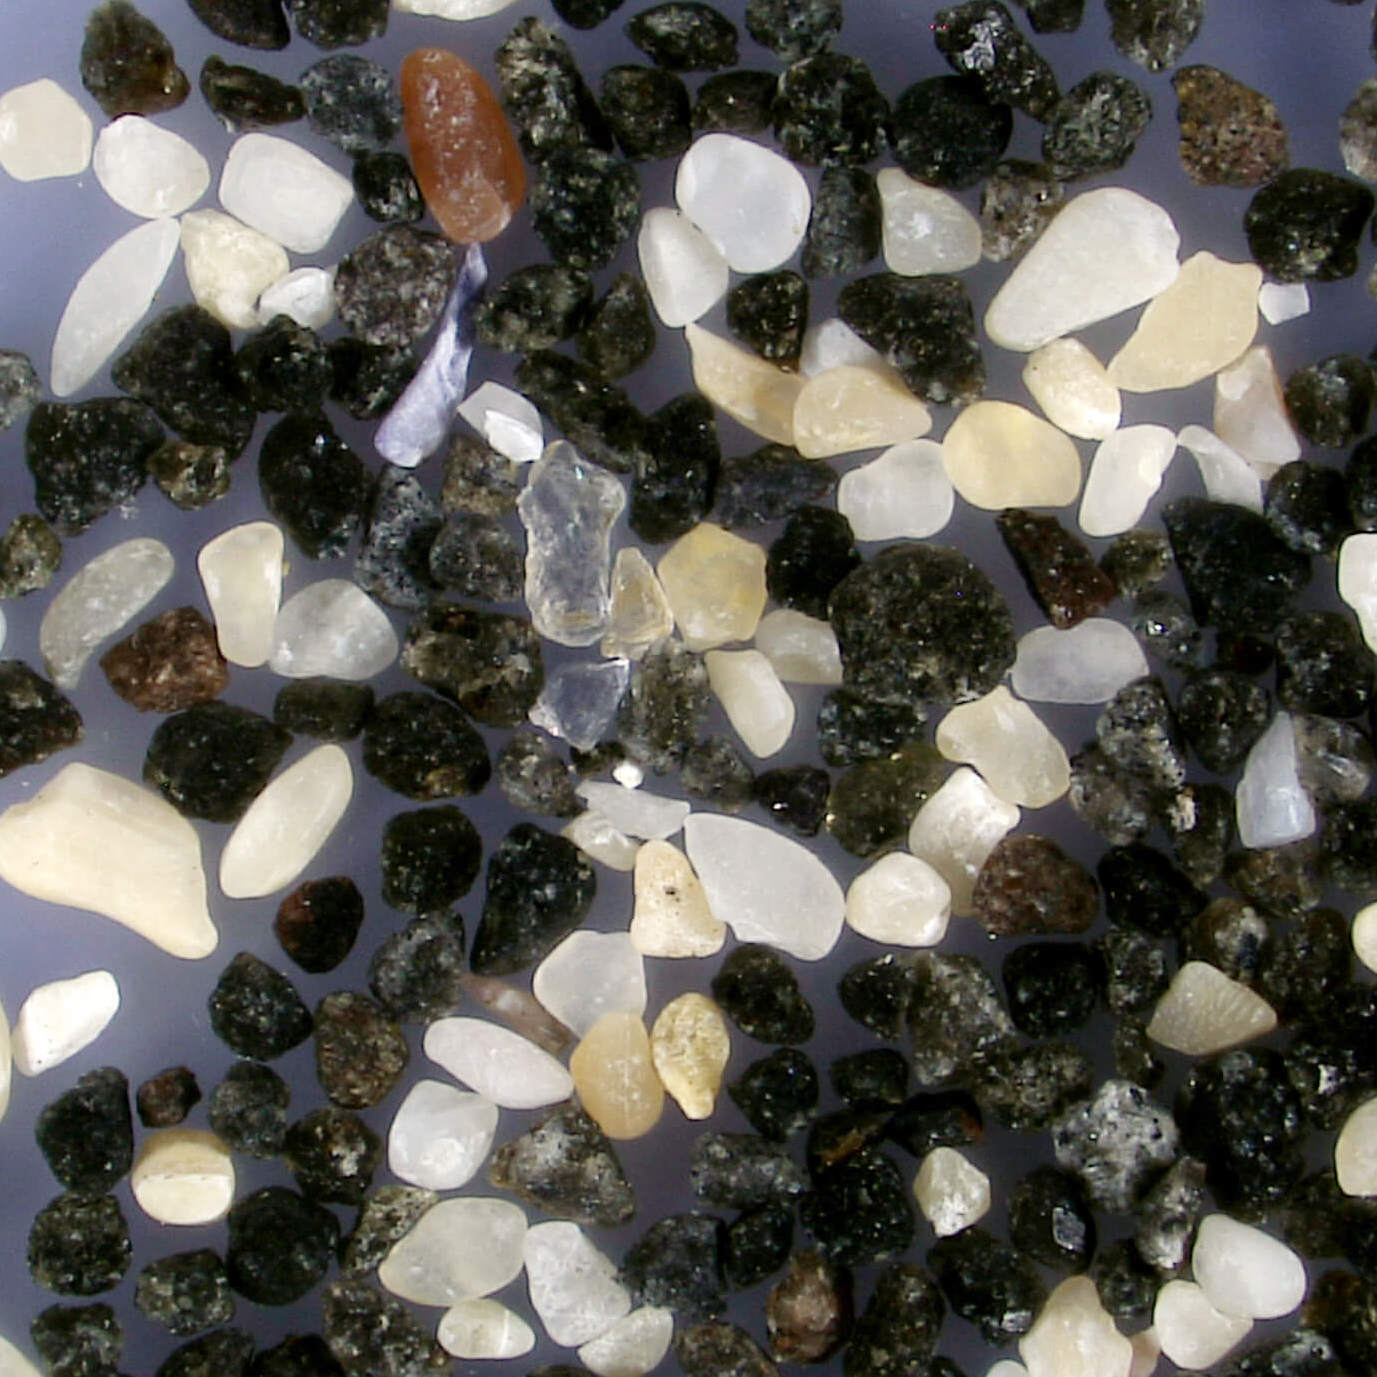 Sq Sæból Westfjords Iceland Sand Grains Magnified Under Microscope 1